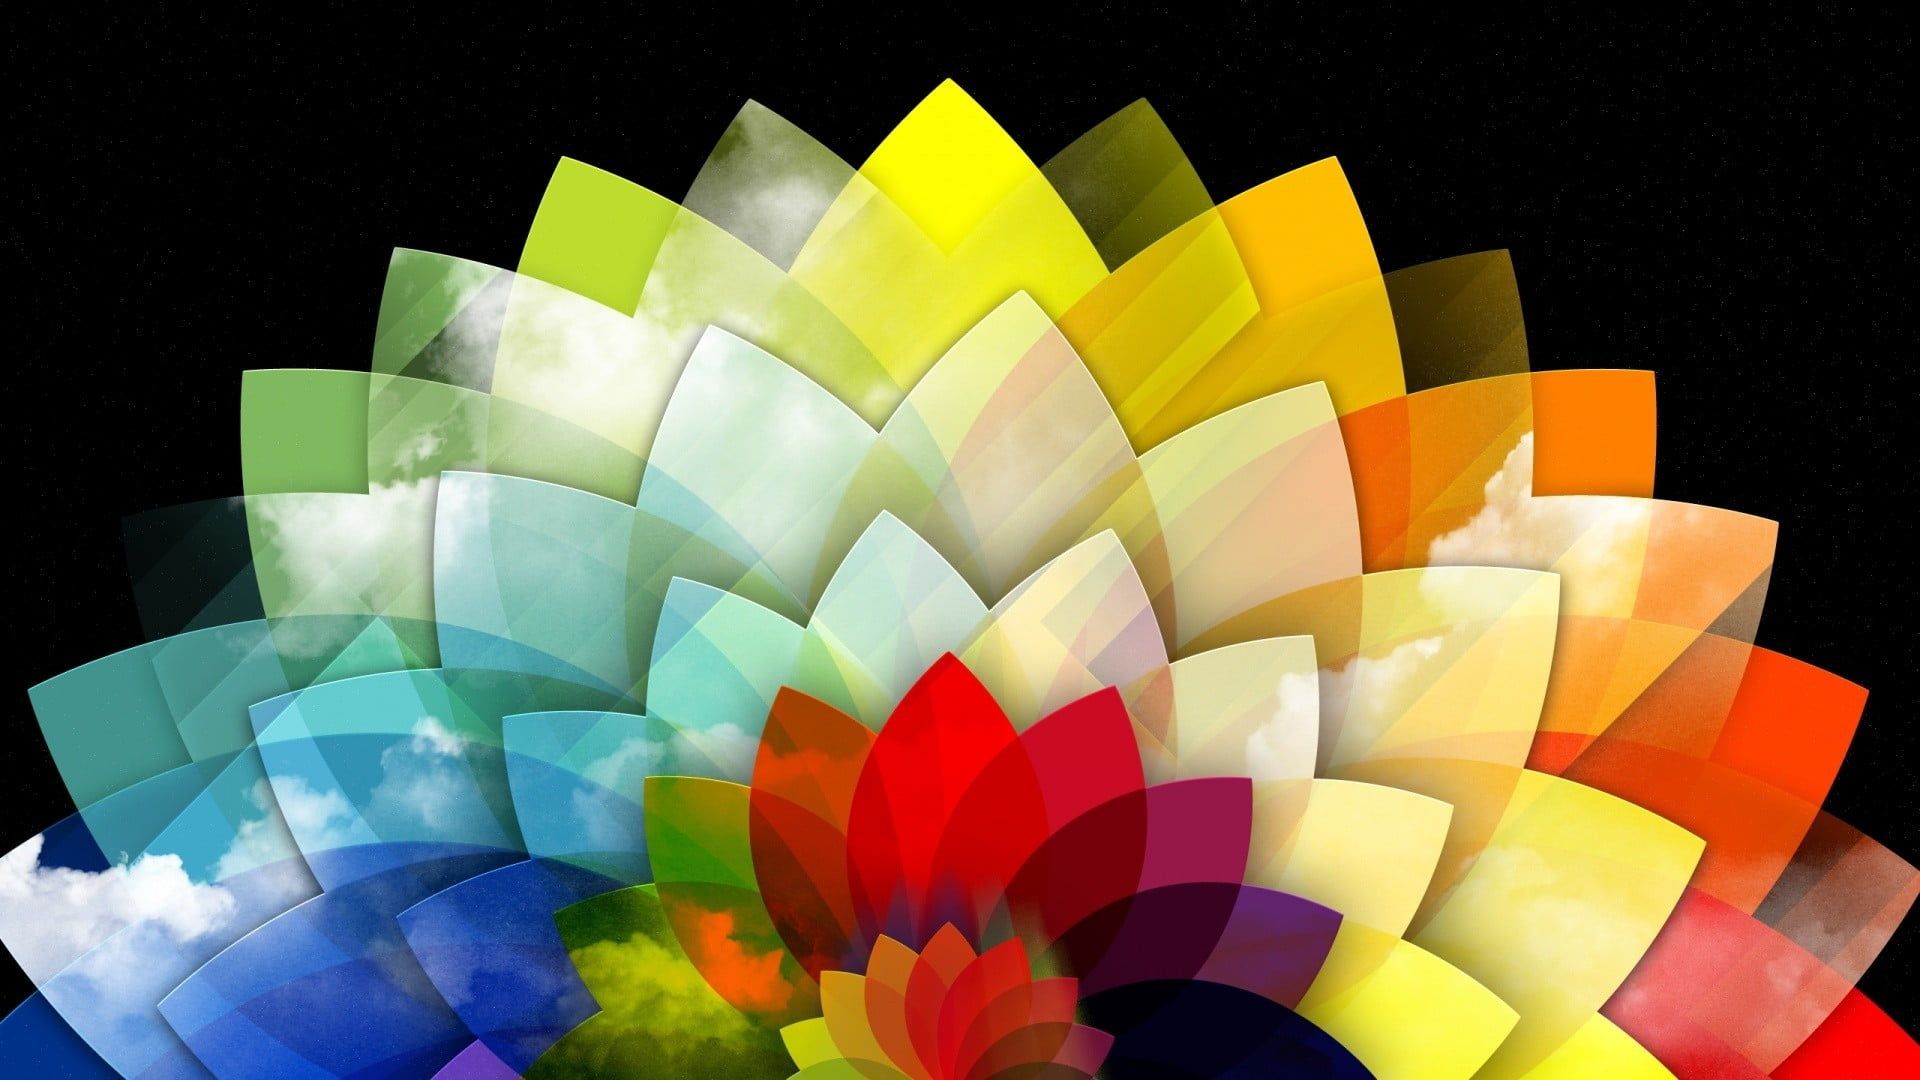 Colorful Flowers Digital Art Wallpapers